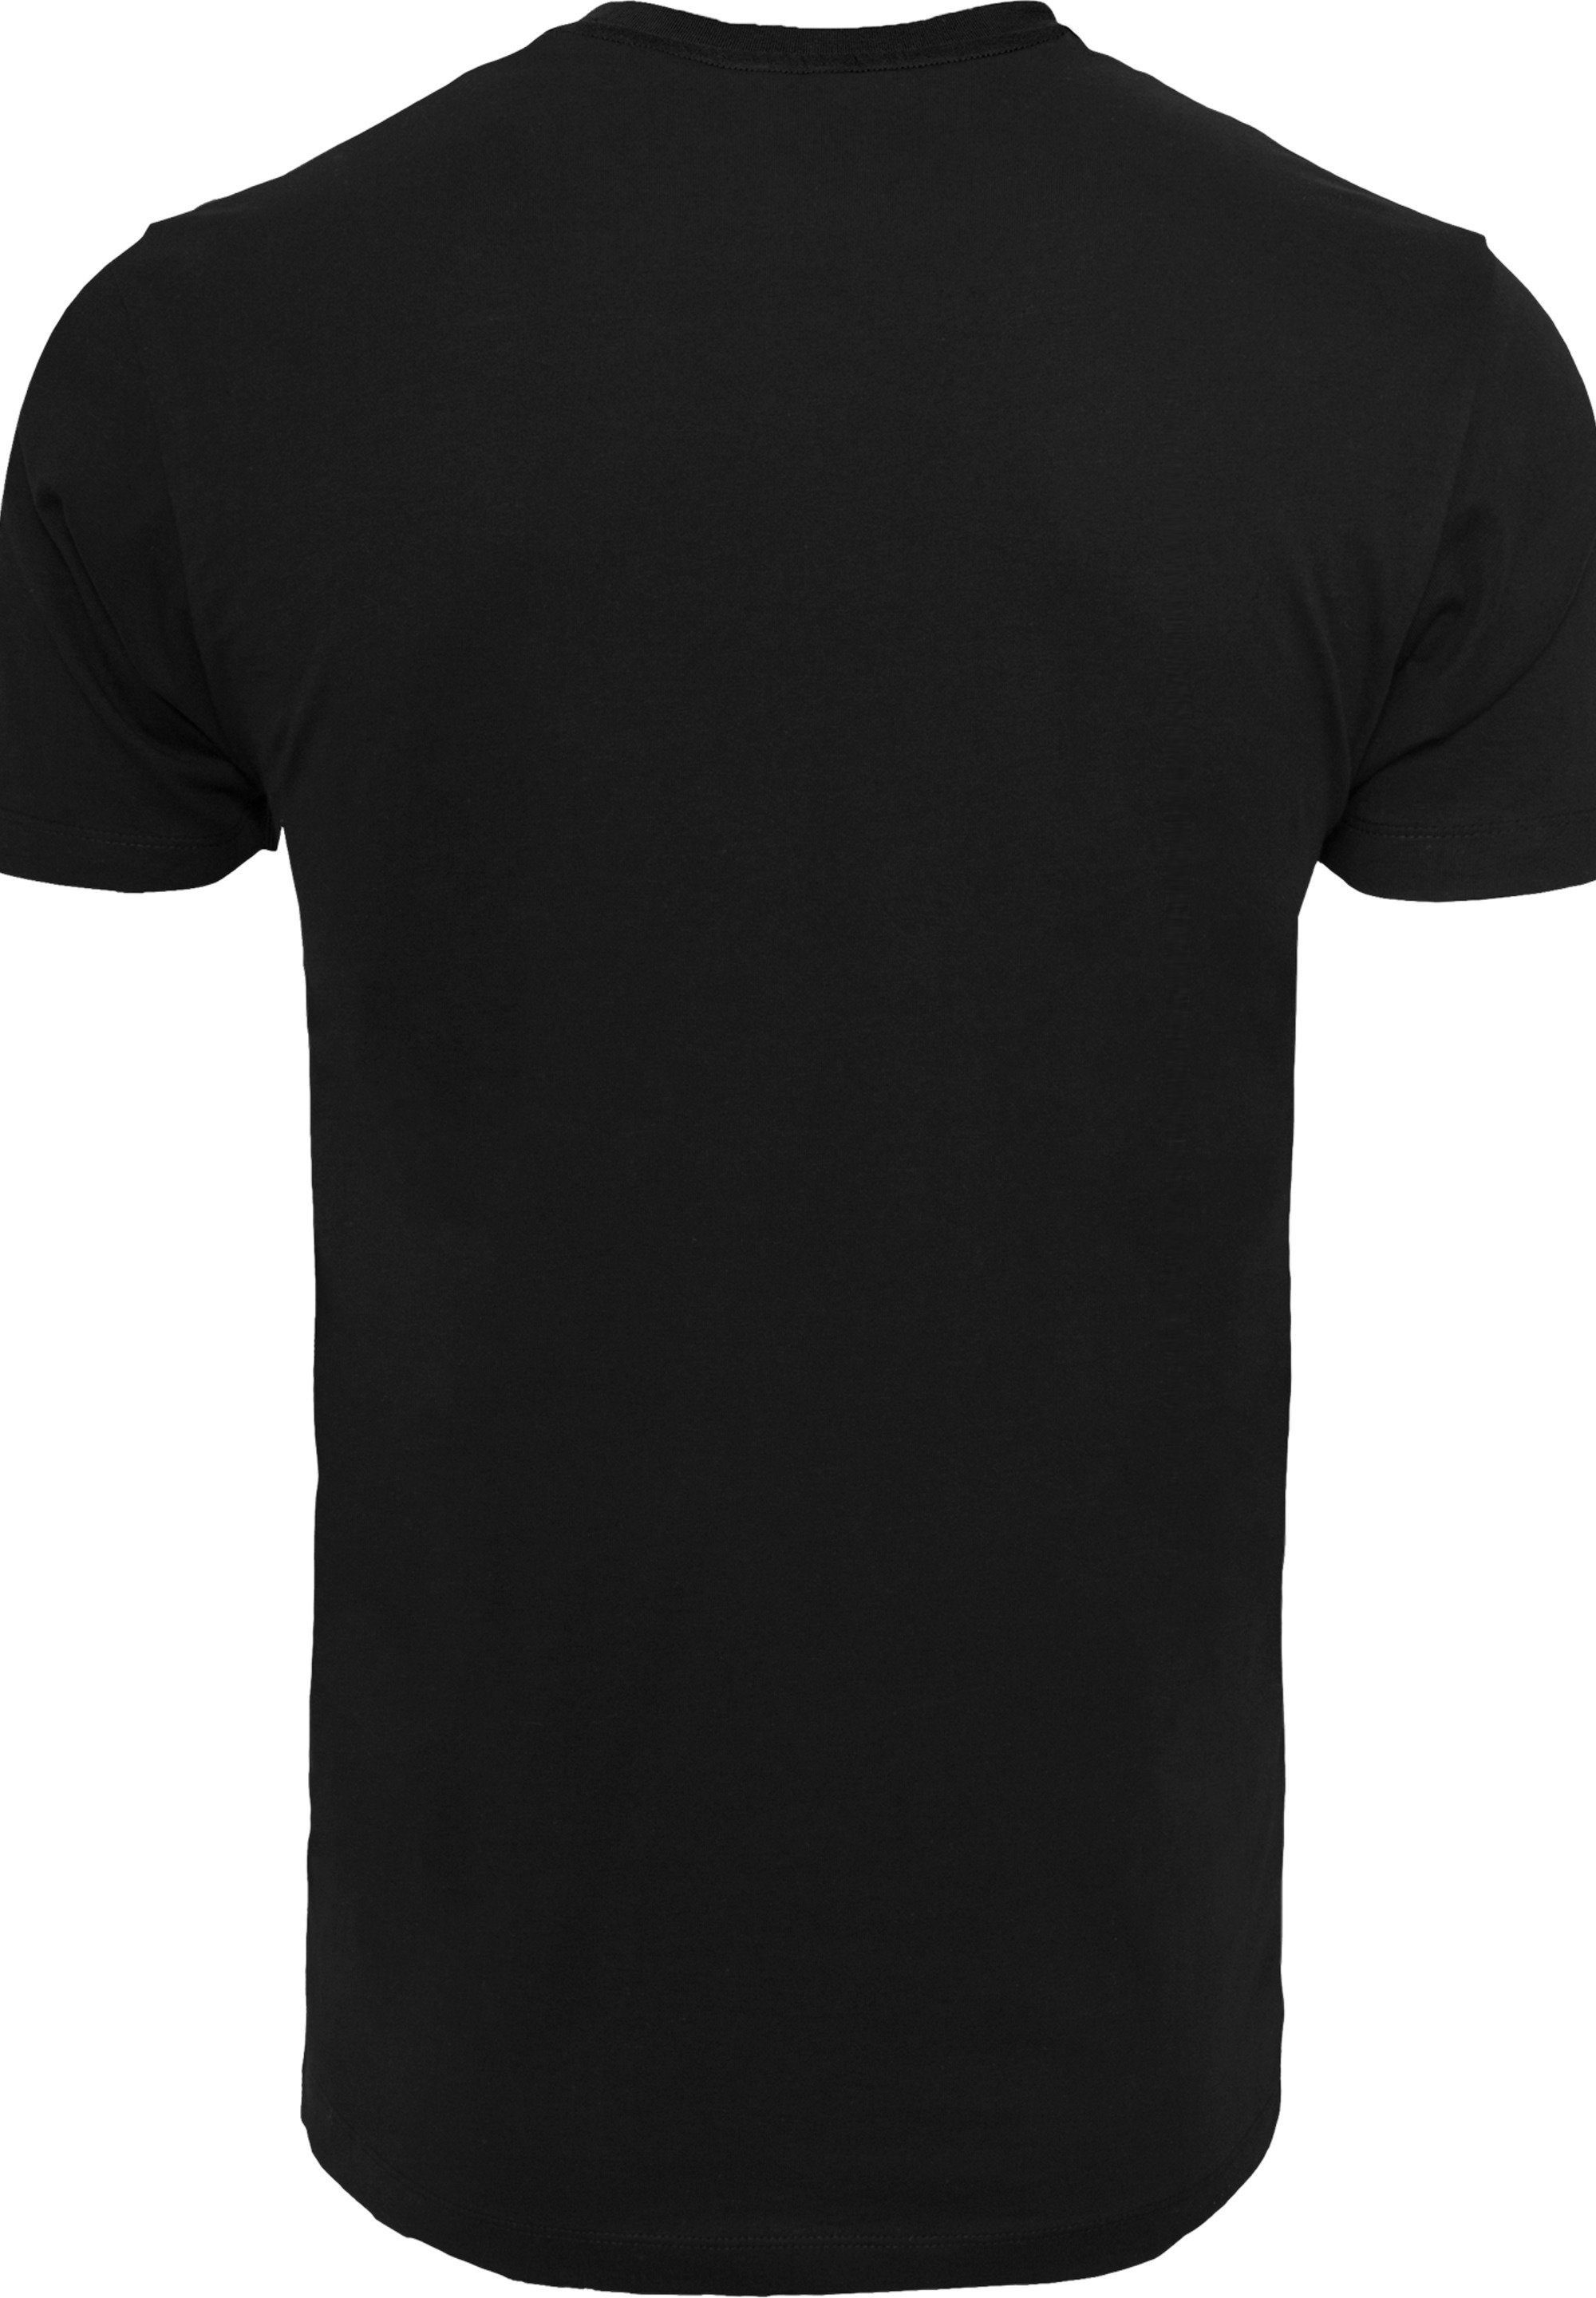 Herren Shirts F4NT4STIC T-Shirt Janis Joplin Spiritual Mono